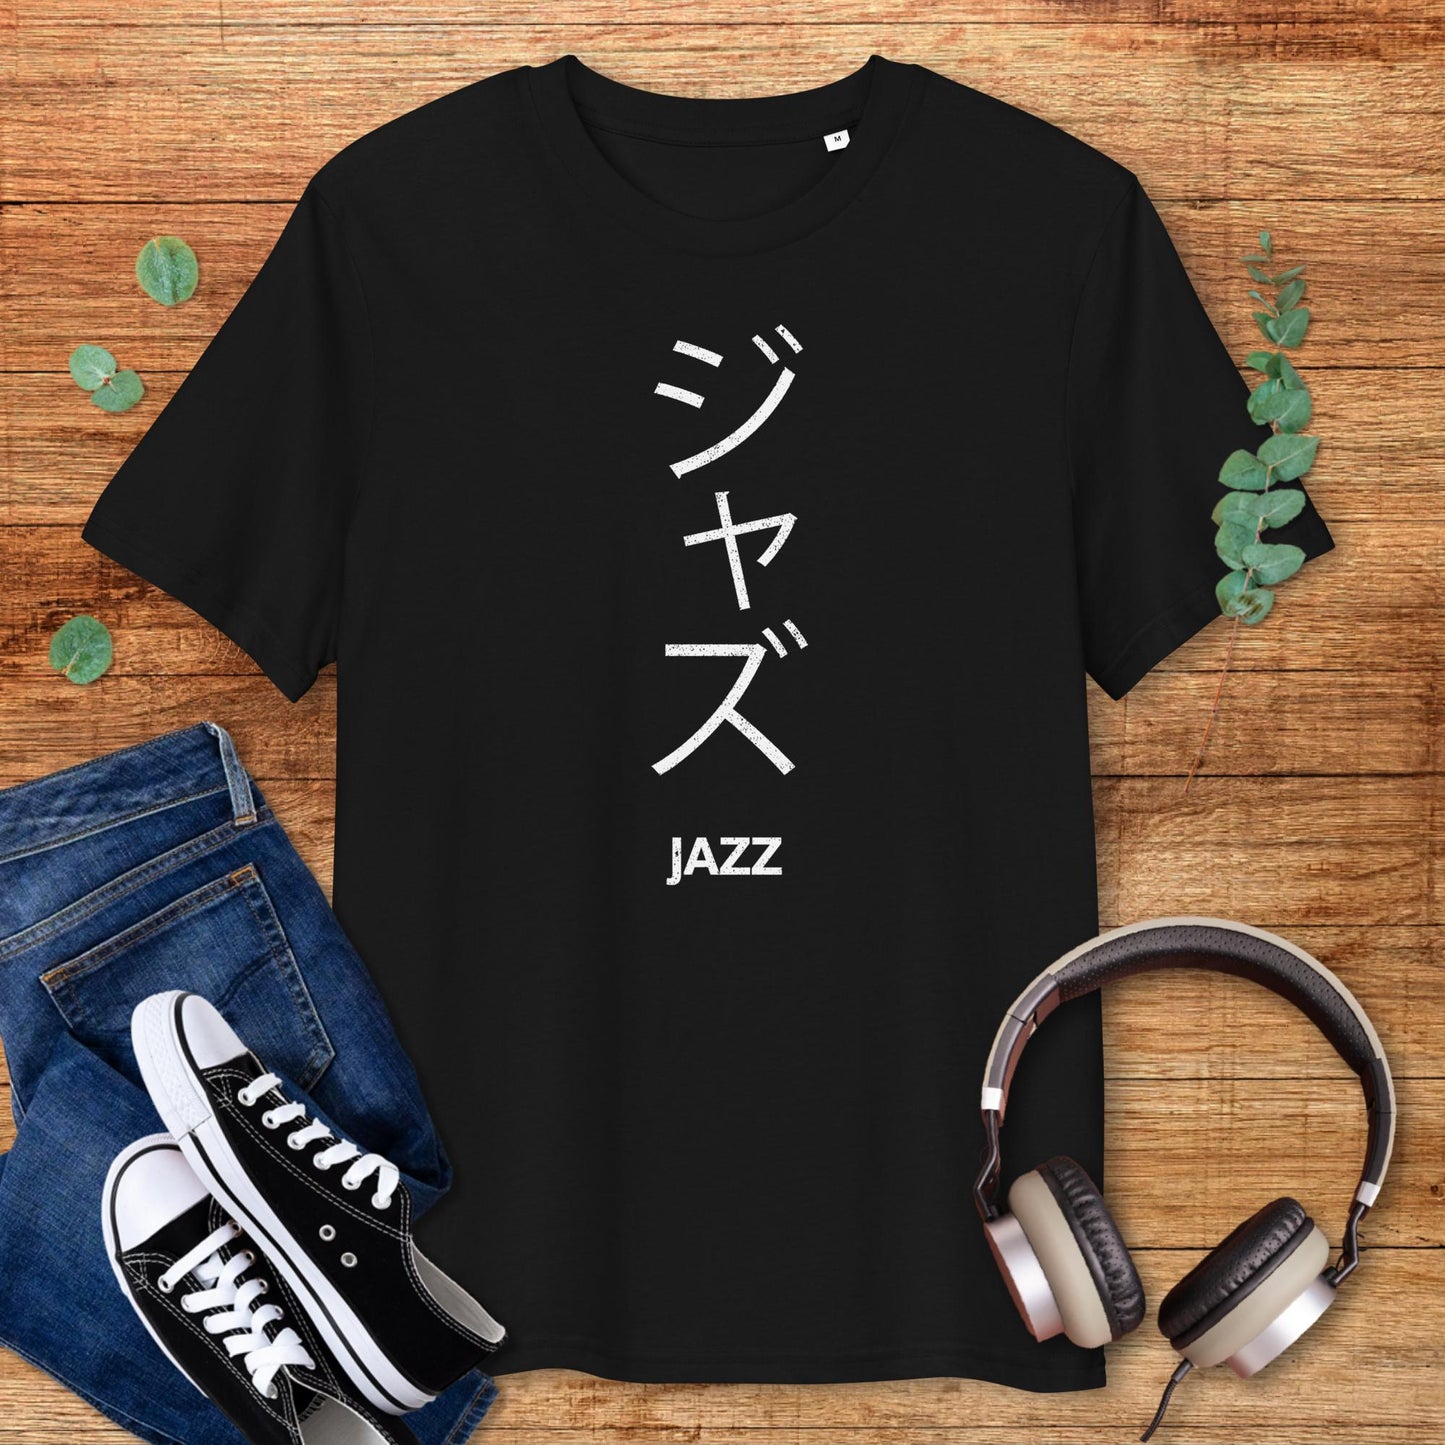 Jazz in Japanese